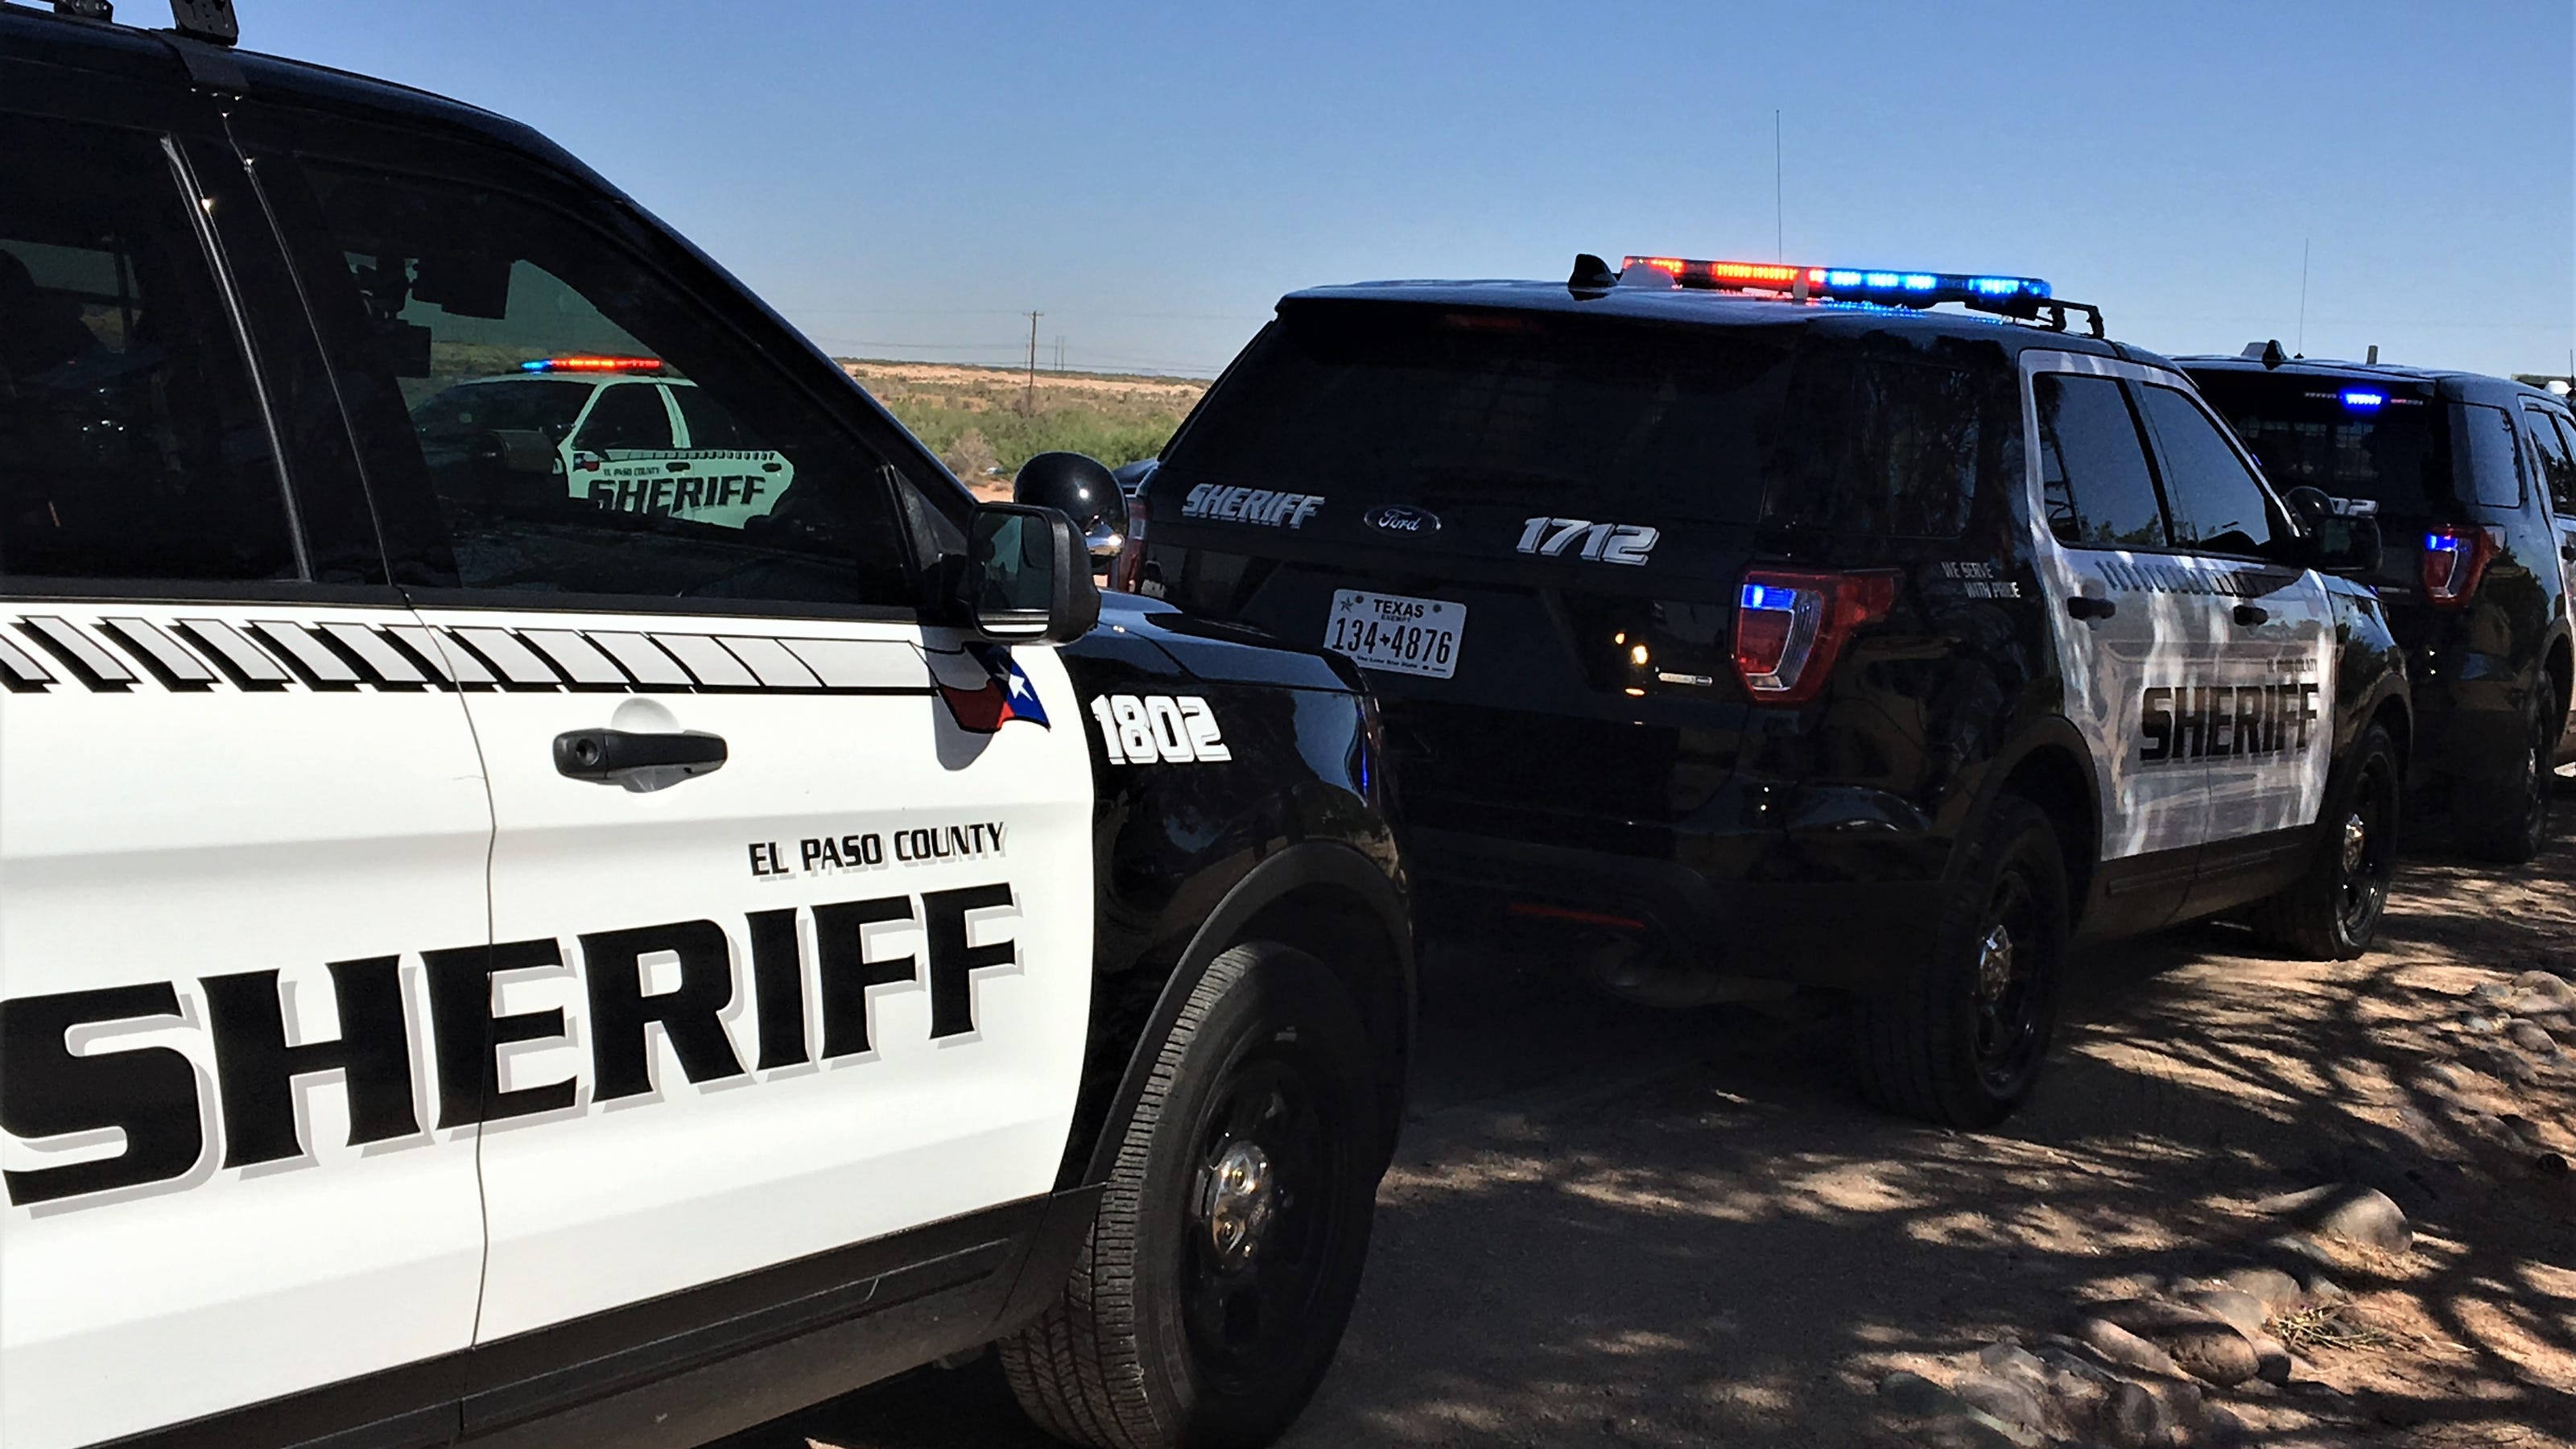 El Paso County Sheriff's Office, Socorro police get grants for hiring